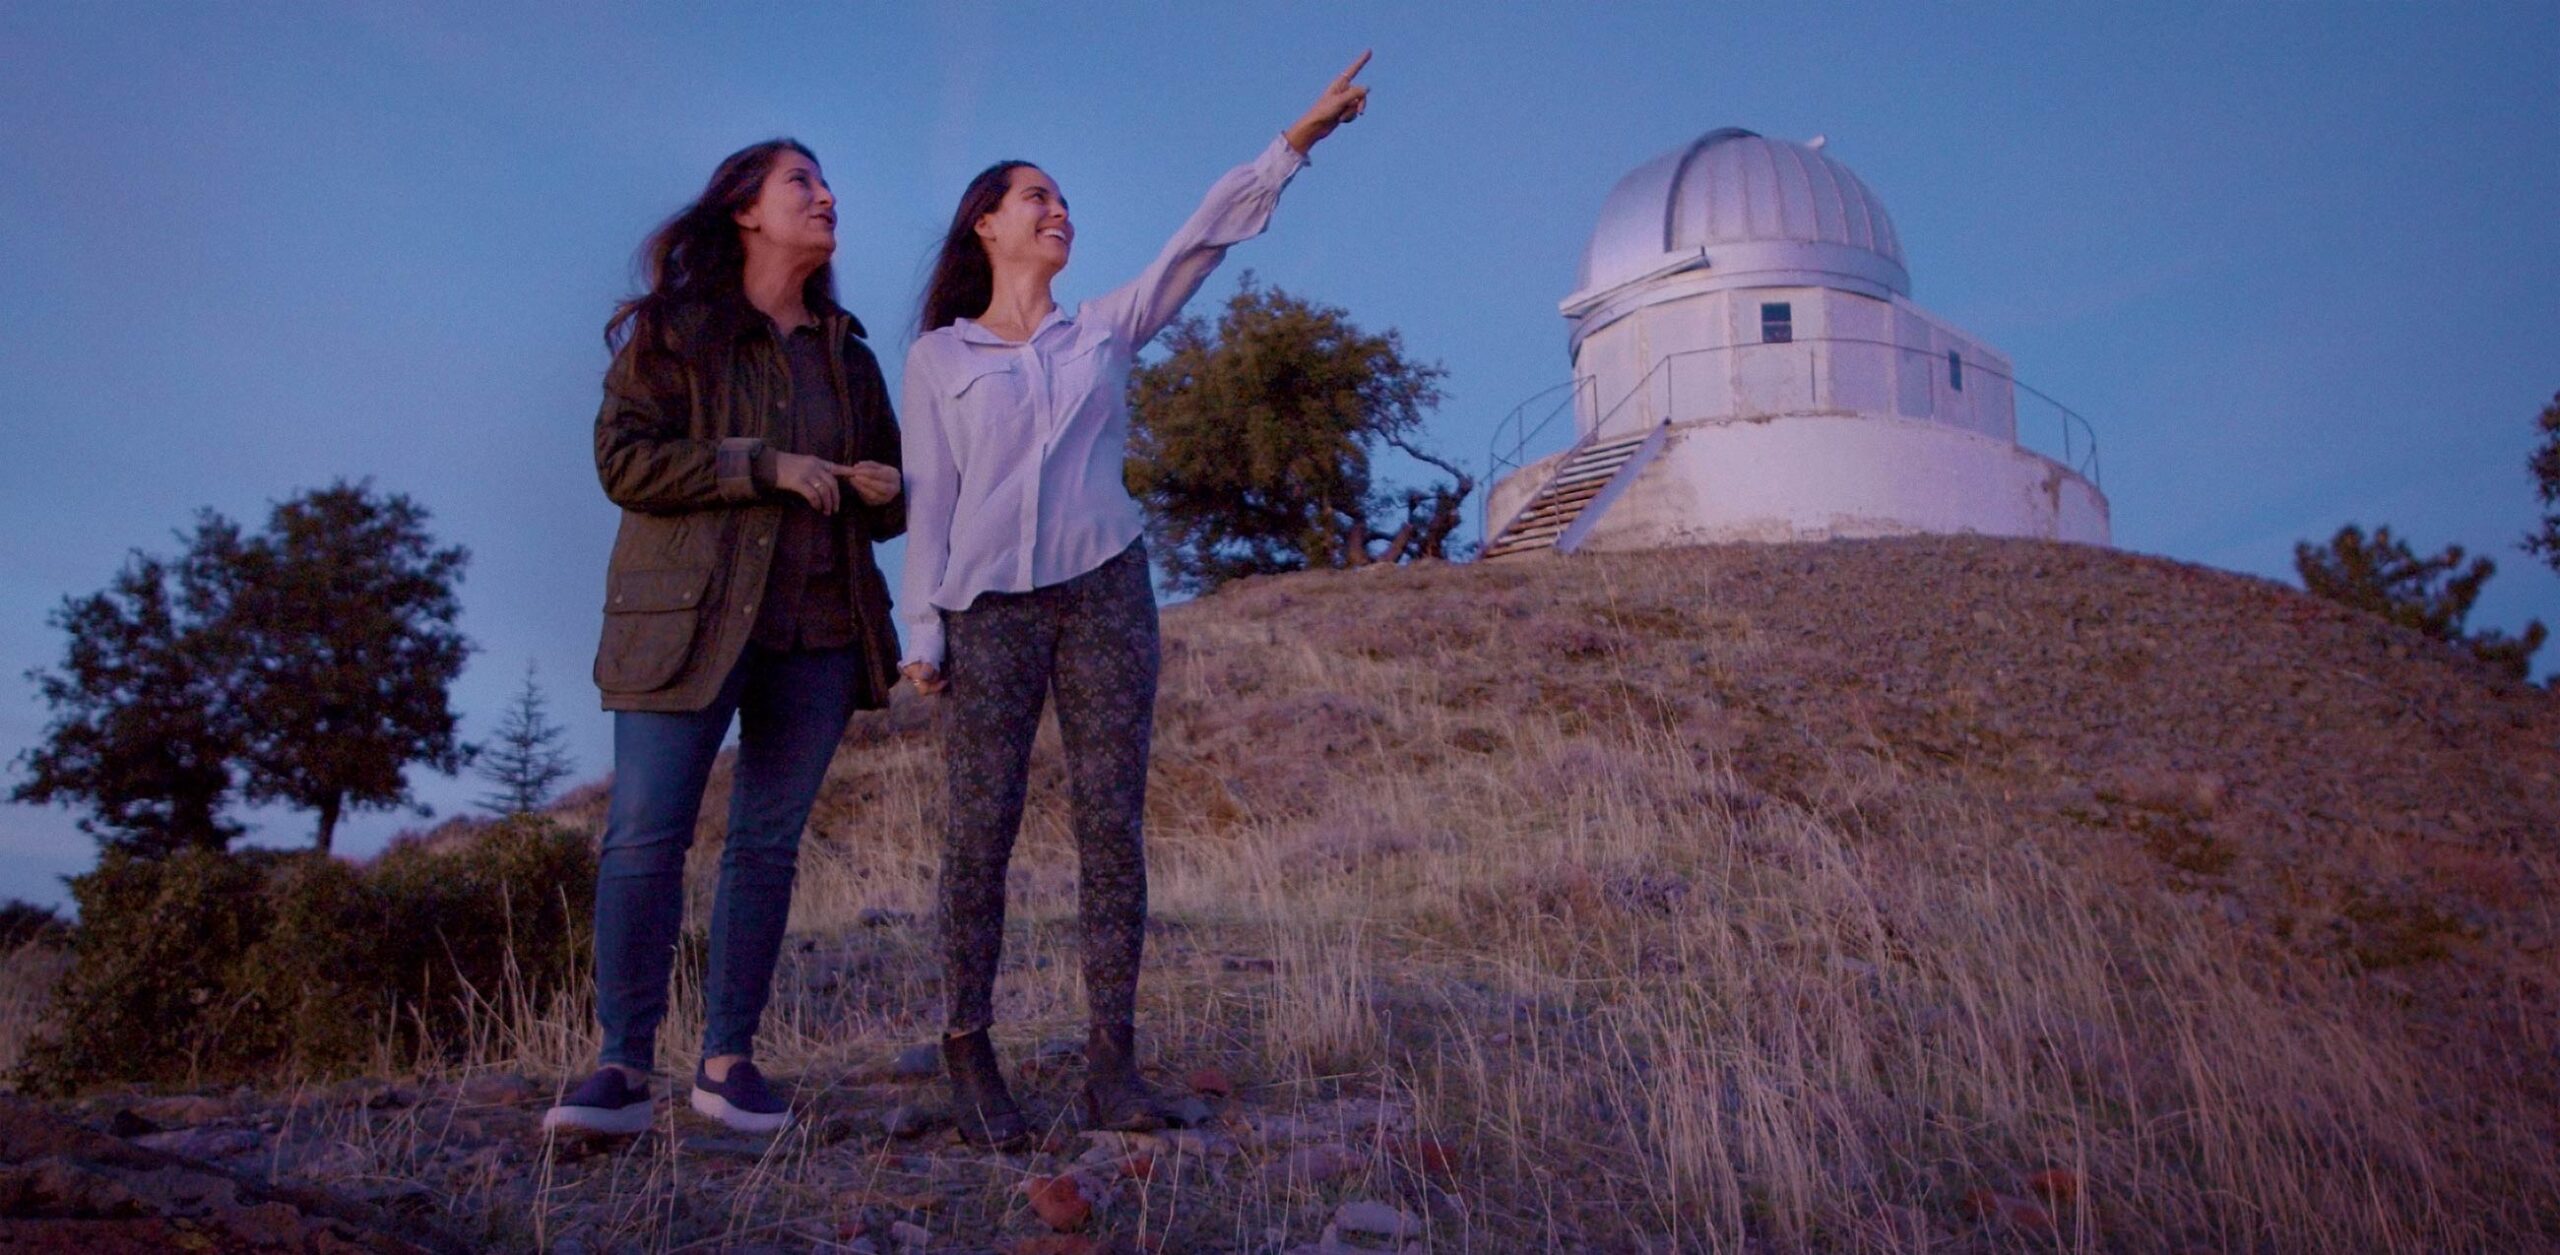 Natalie (left) and Natasha Batalha outside of the Lick Observatory in California. 